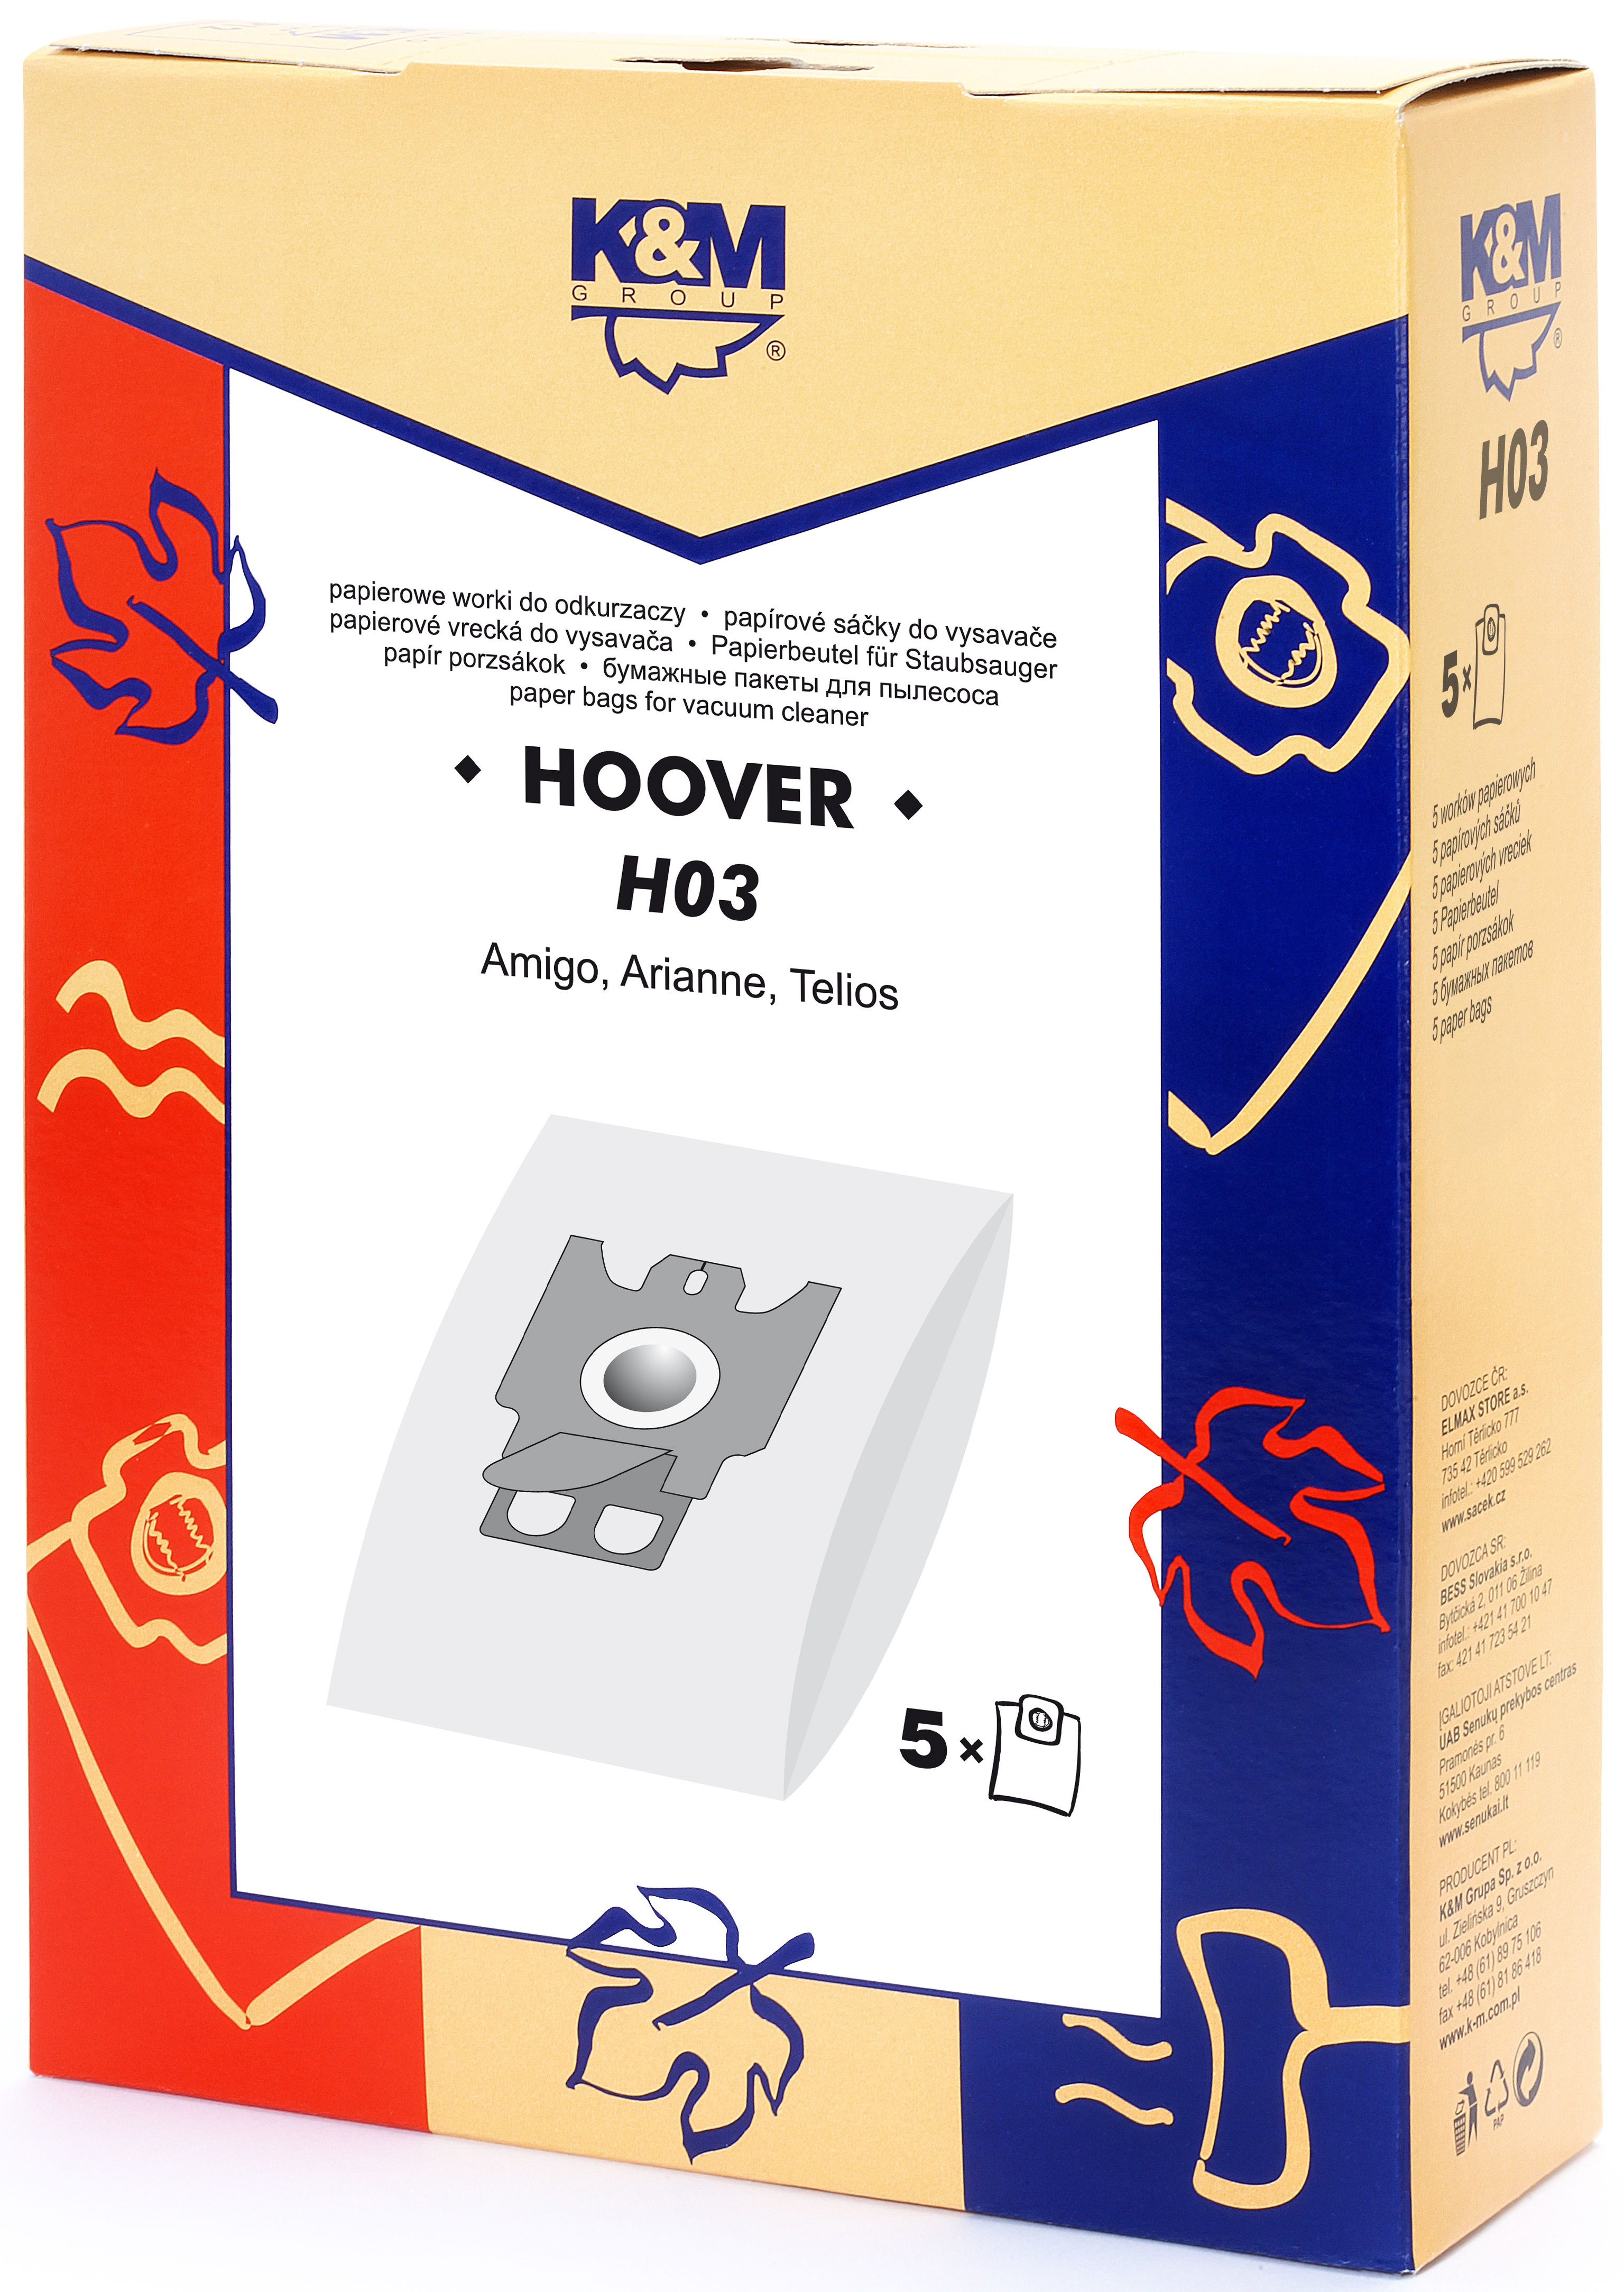 Sac aspirator Hoover H30, hartie, 5X saci, K&M [1]